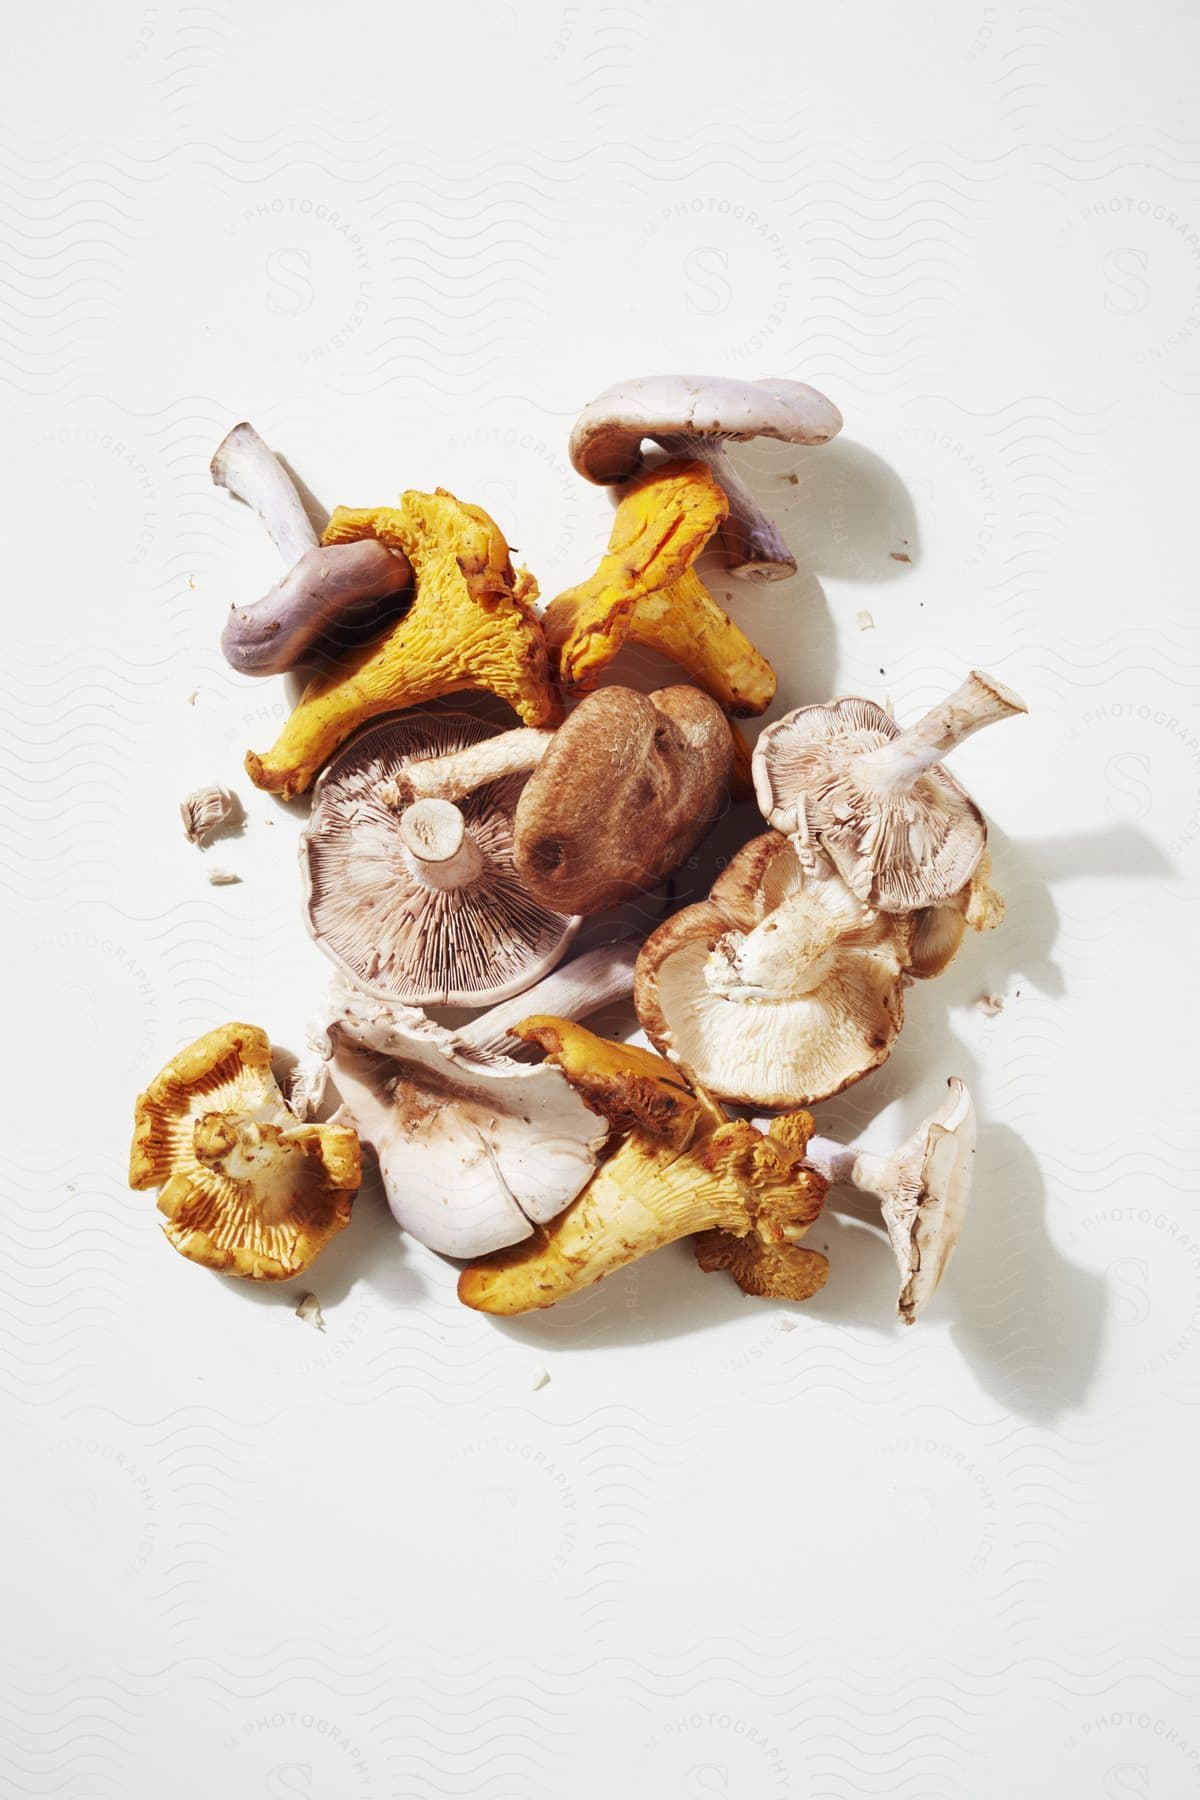 Several dried mushrooms used as an ingredient in cuisine